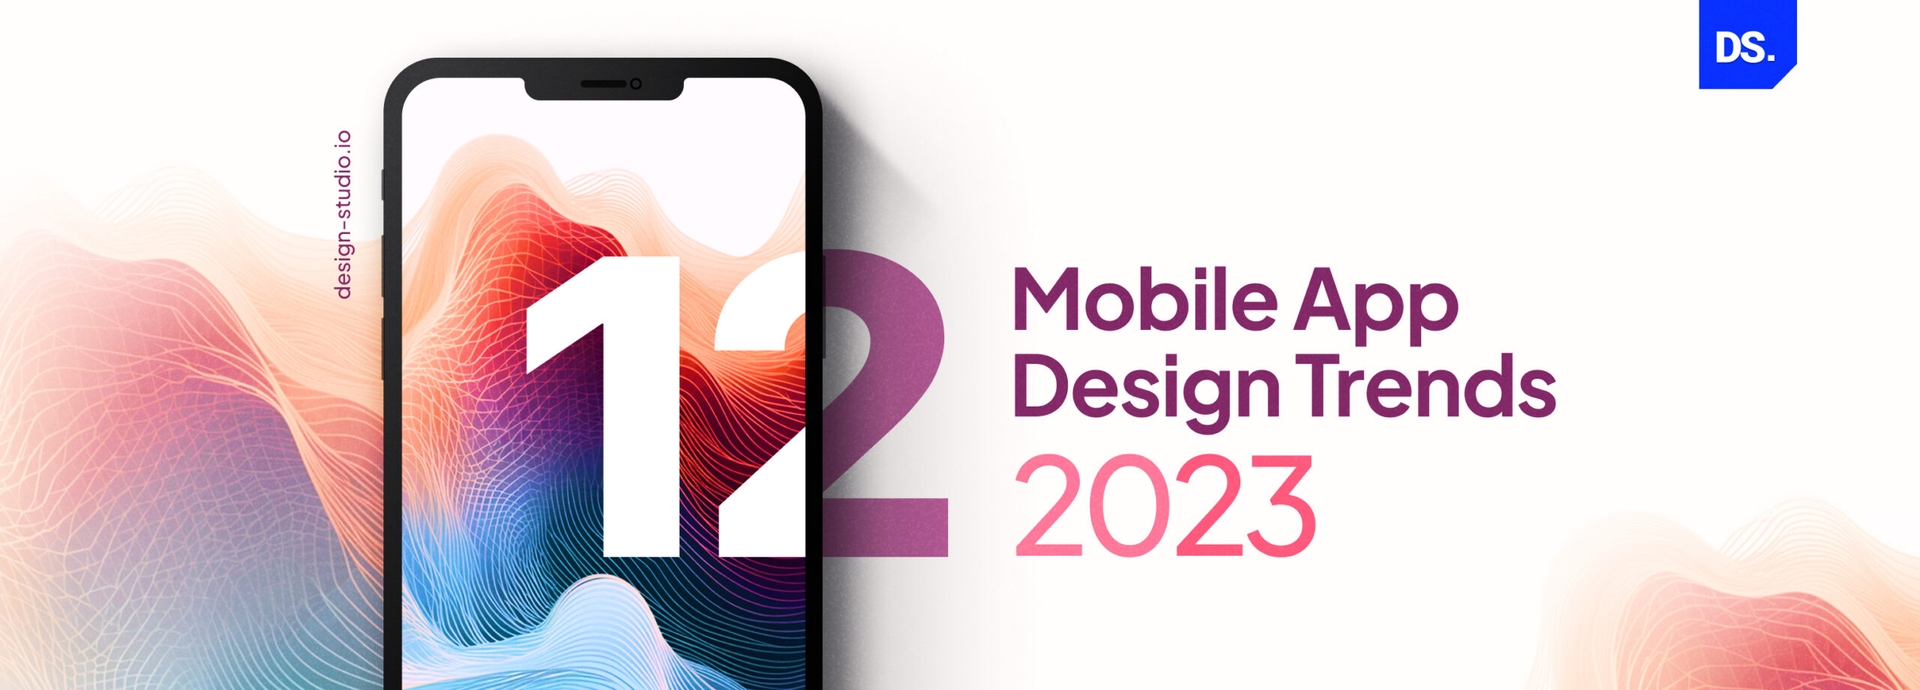 Mobile App Design Trends_Featured